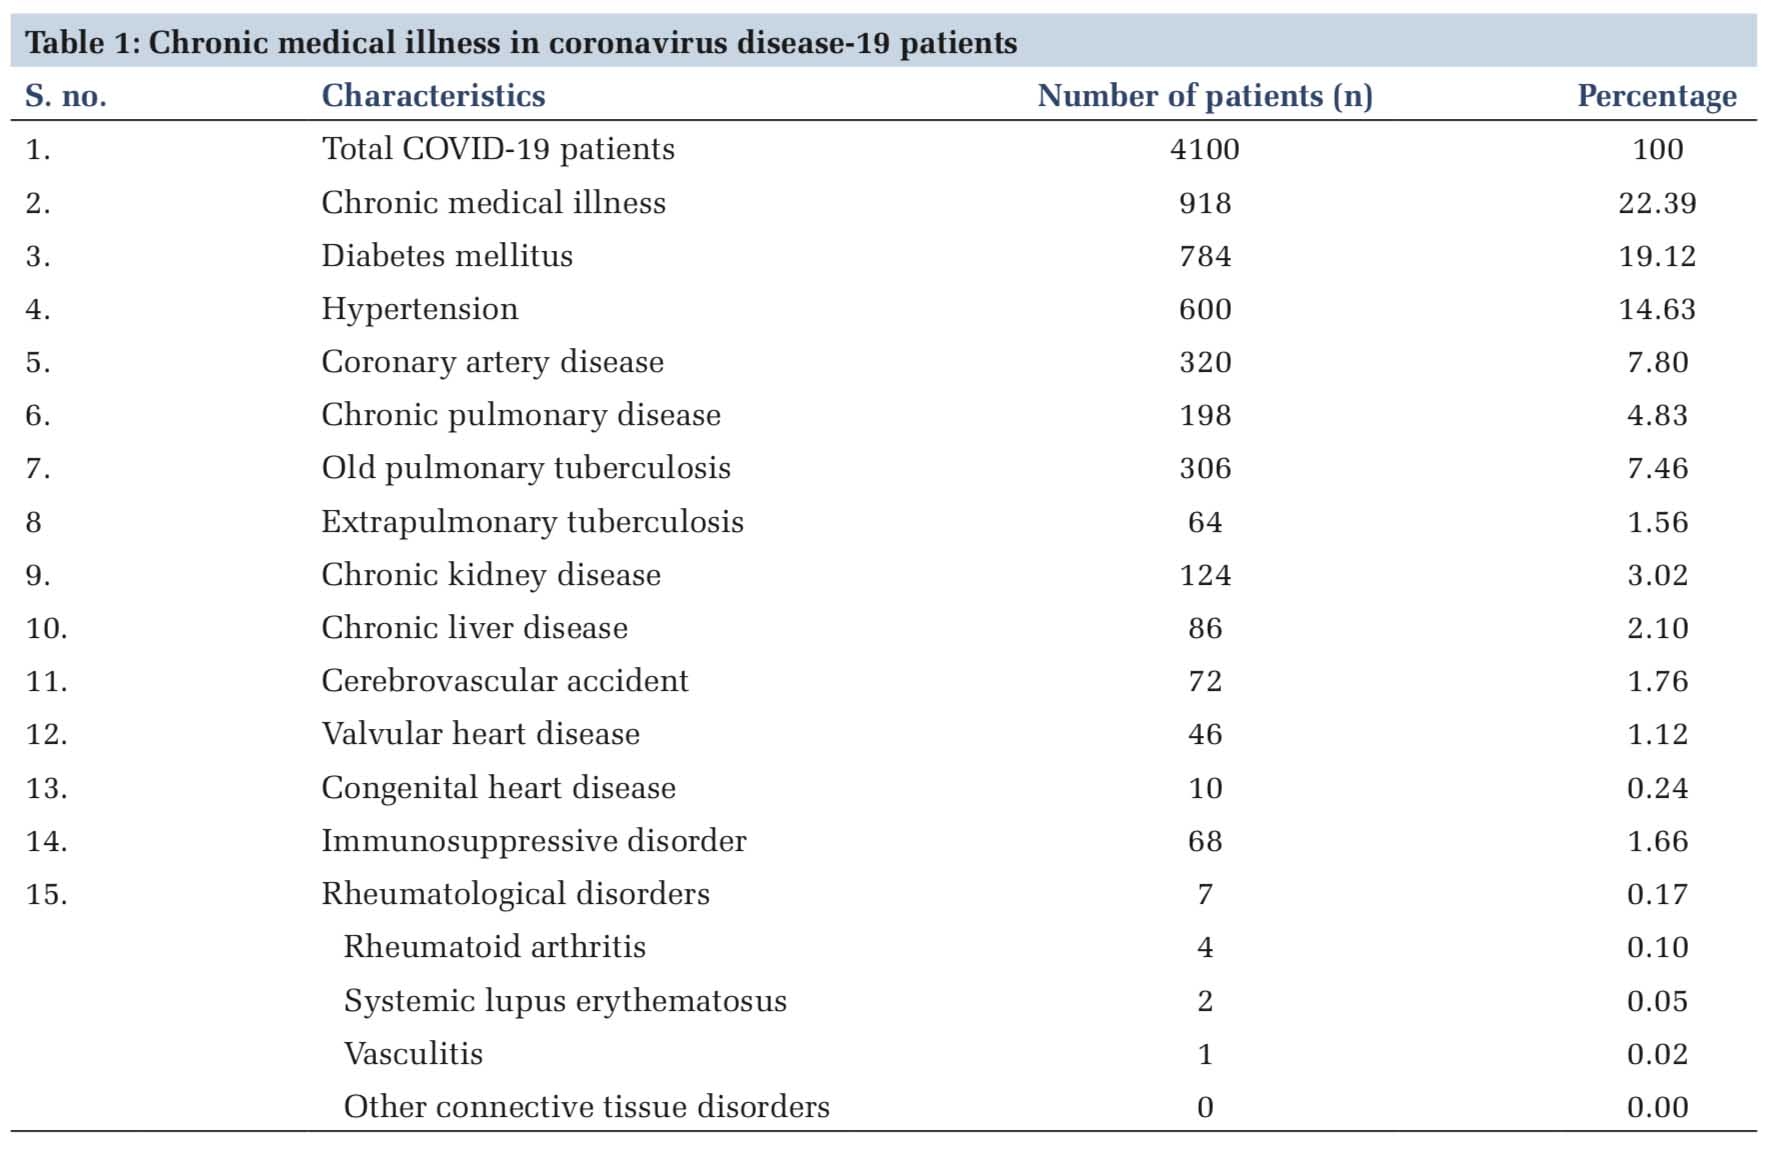 Hydroxychloroquine in Rheumatological Disorders: The Potential Buffer against Coronavirus Disease-19?